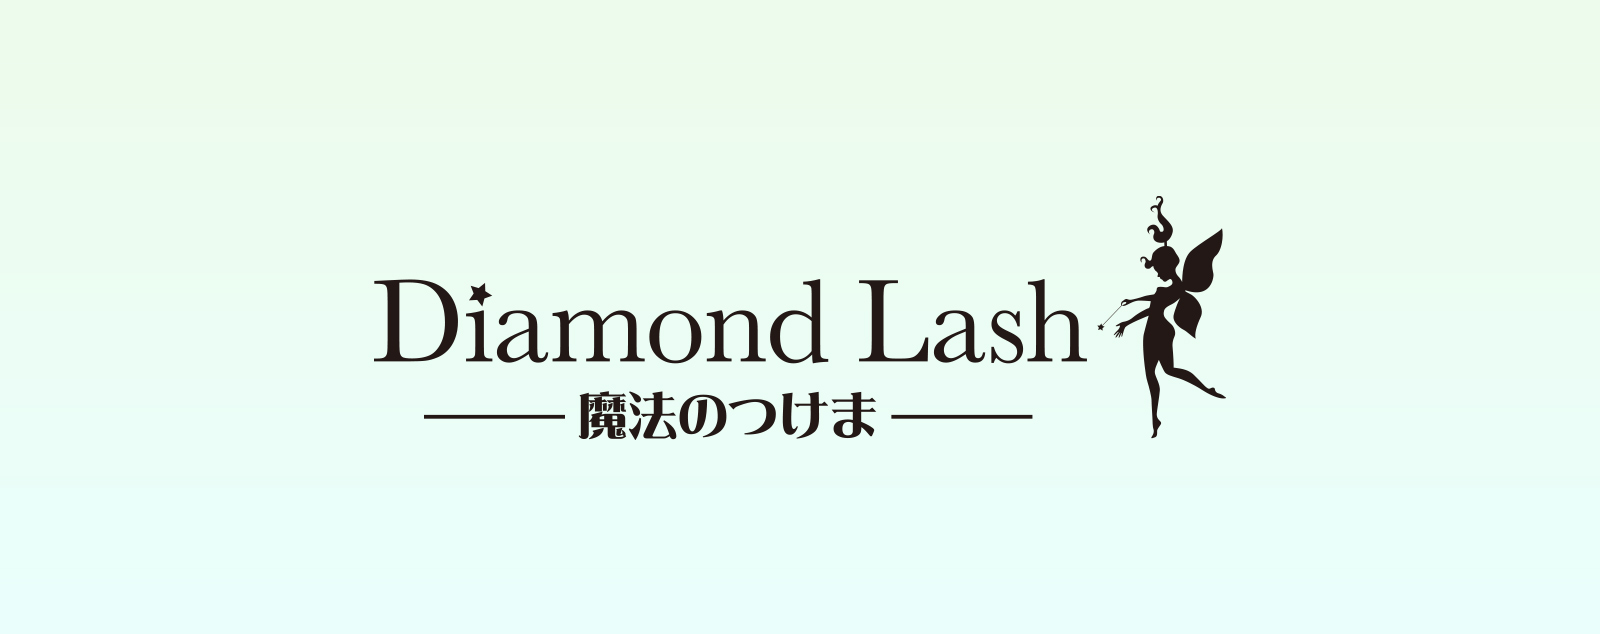 EYELASH SERIES - ダイヤモンドラッシュ Diamond Lash